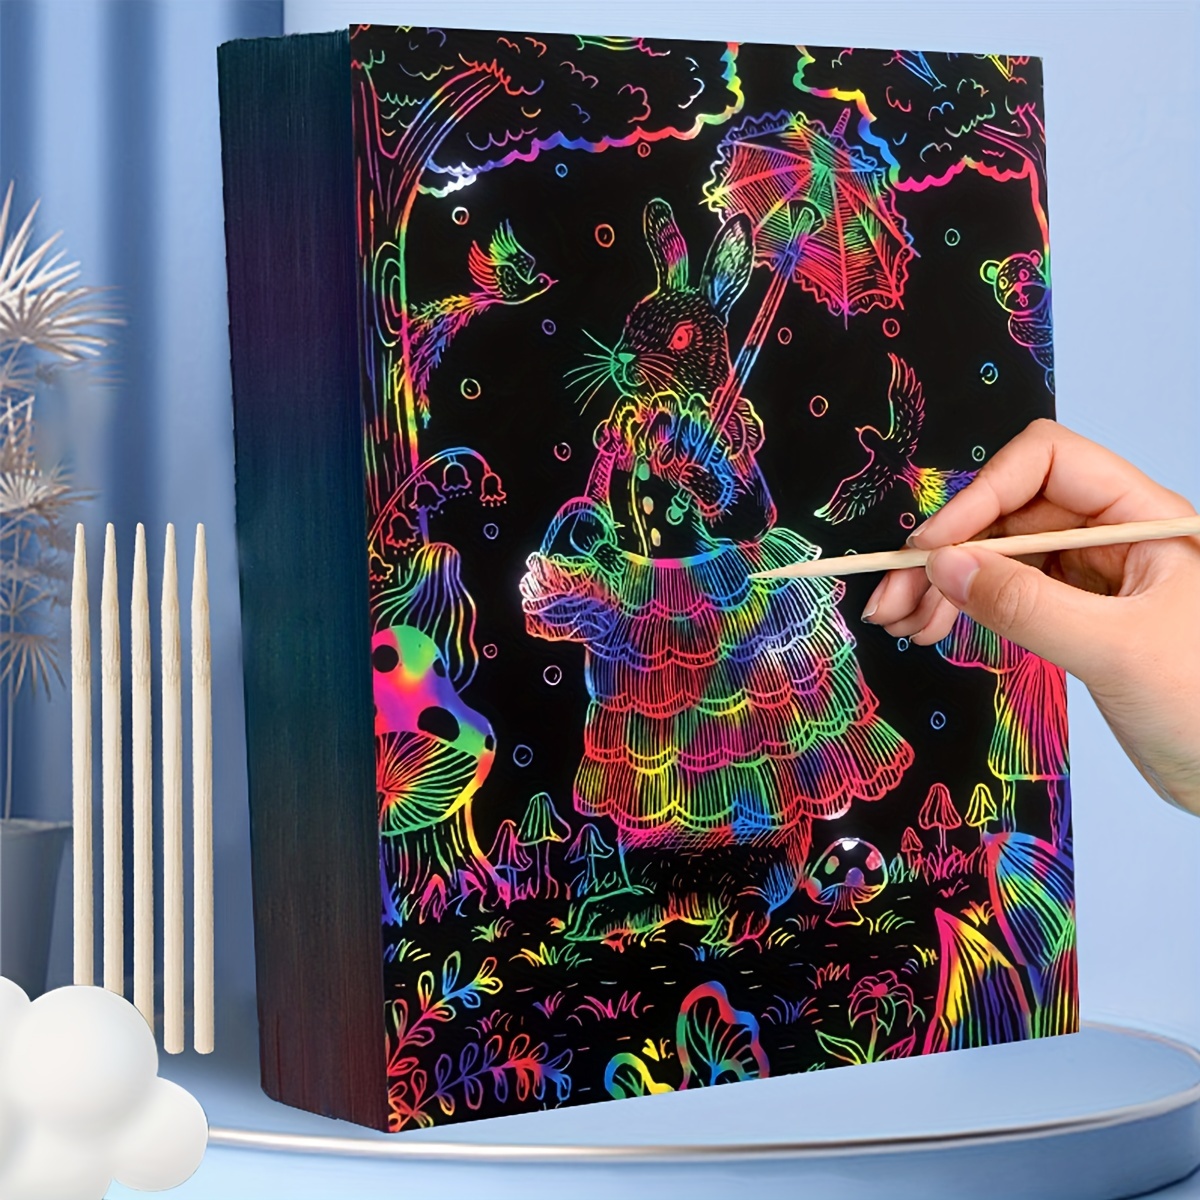 Scratch Painting Kits, Craft Art Set, Rainbow Art Painting Paper